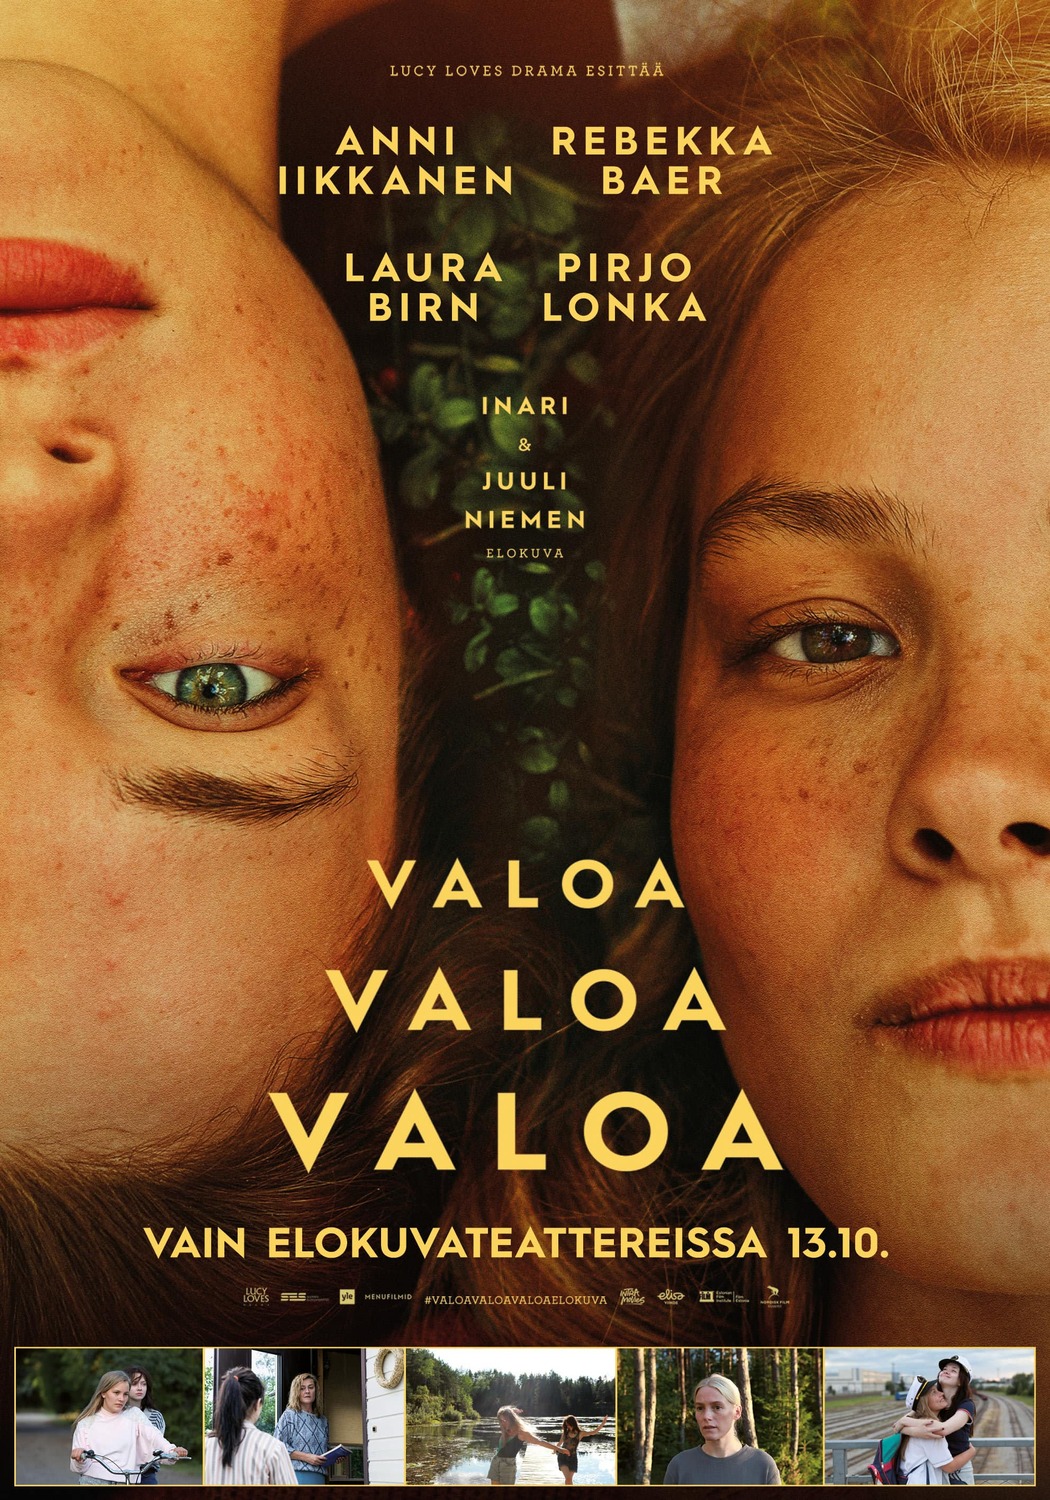 Extra Large Movie Poster Image for Valoa valoa valoa (#1 of 2)